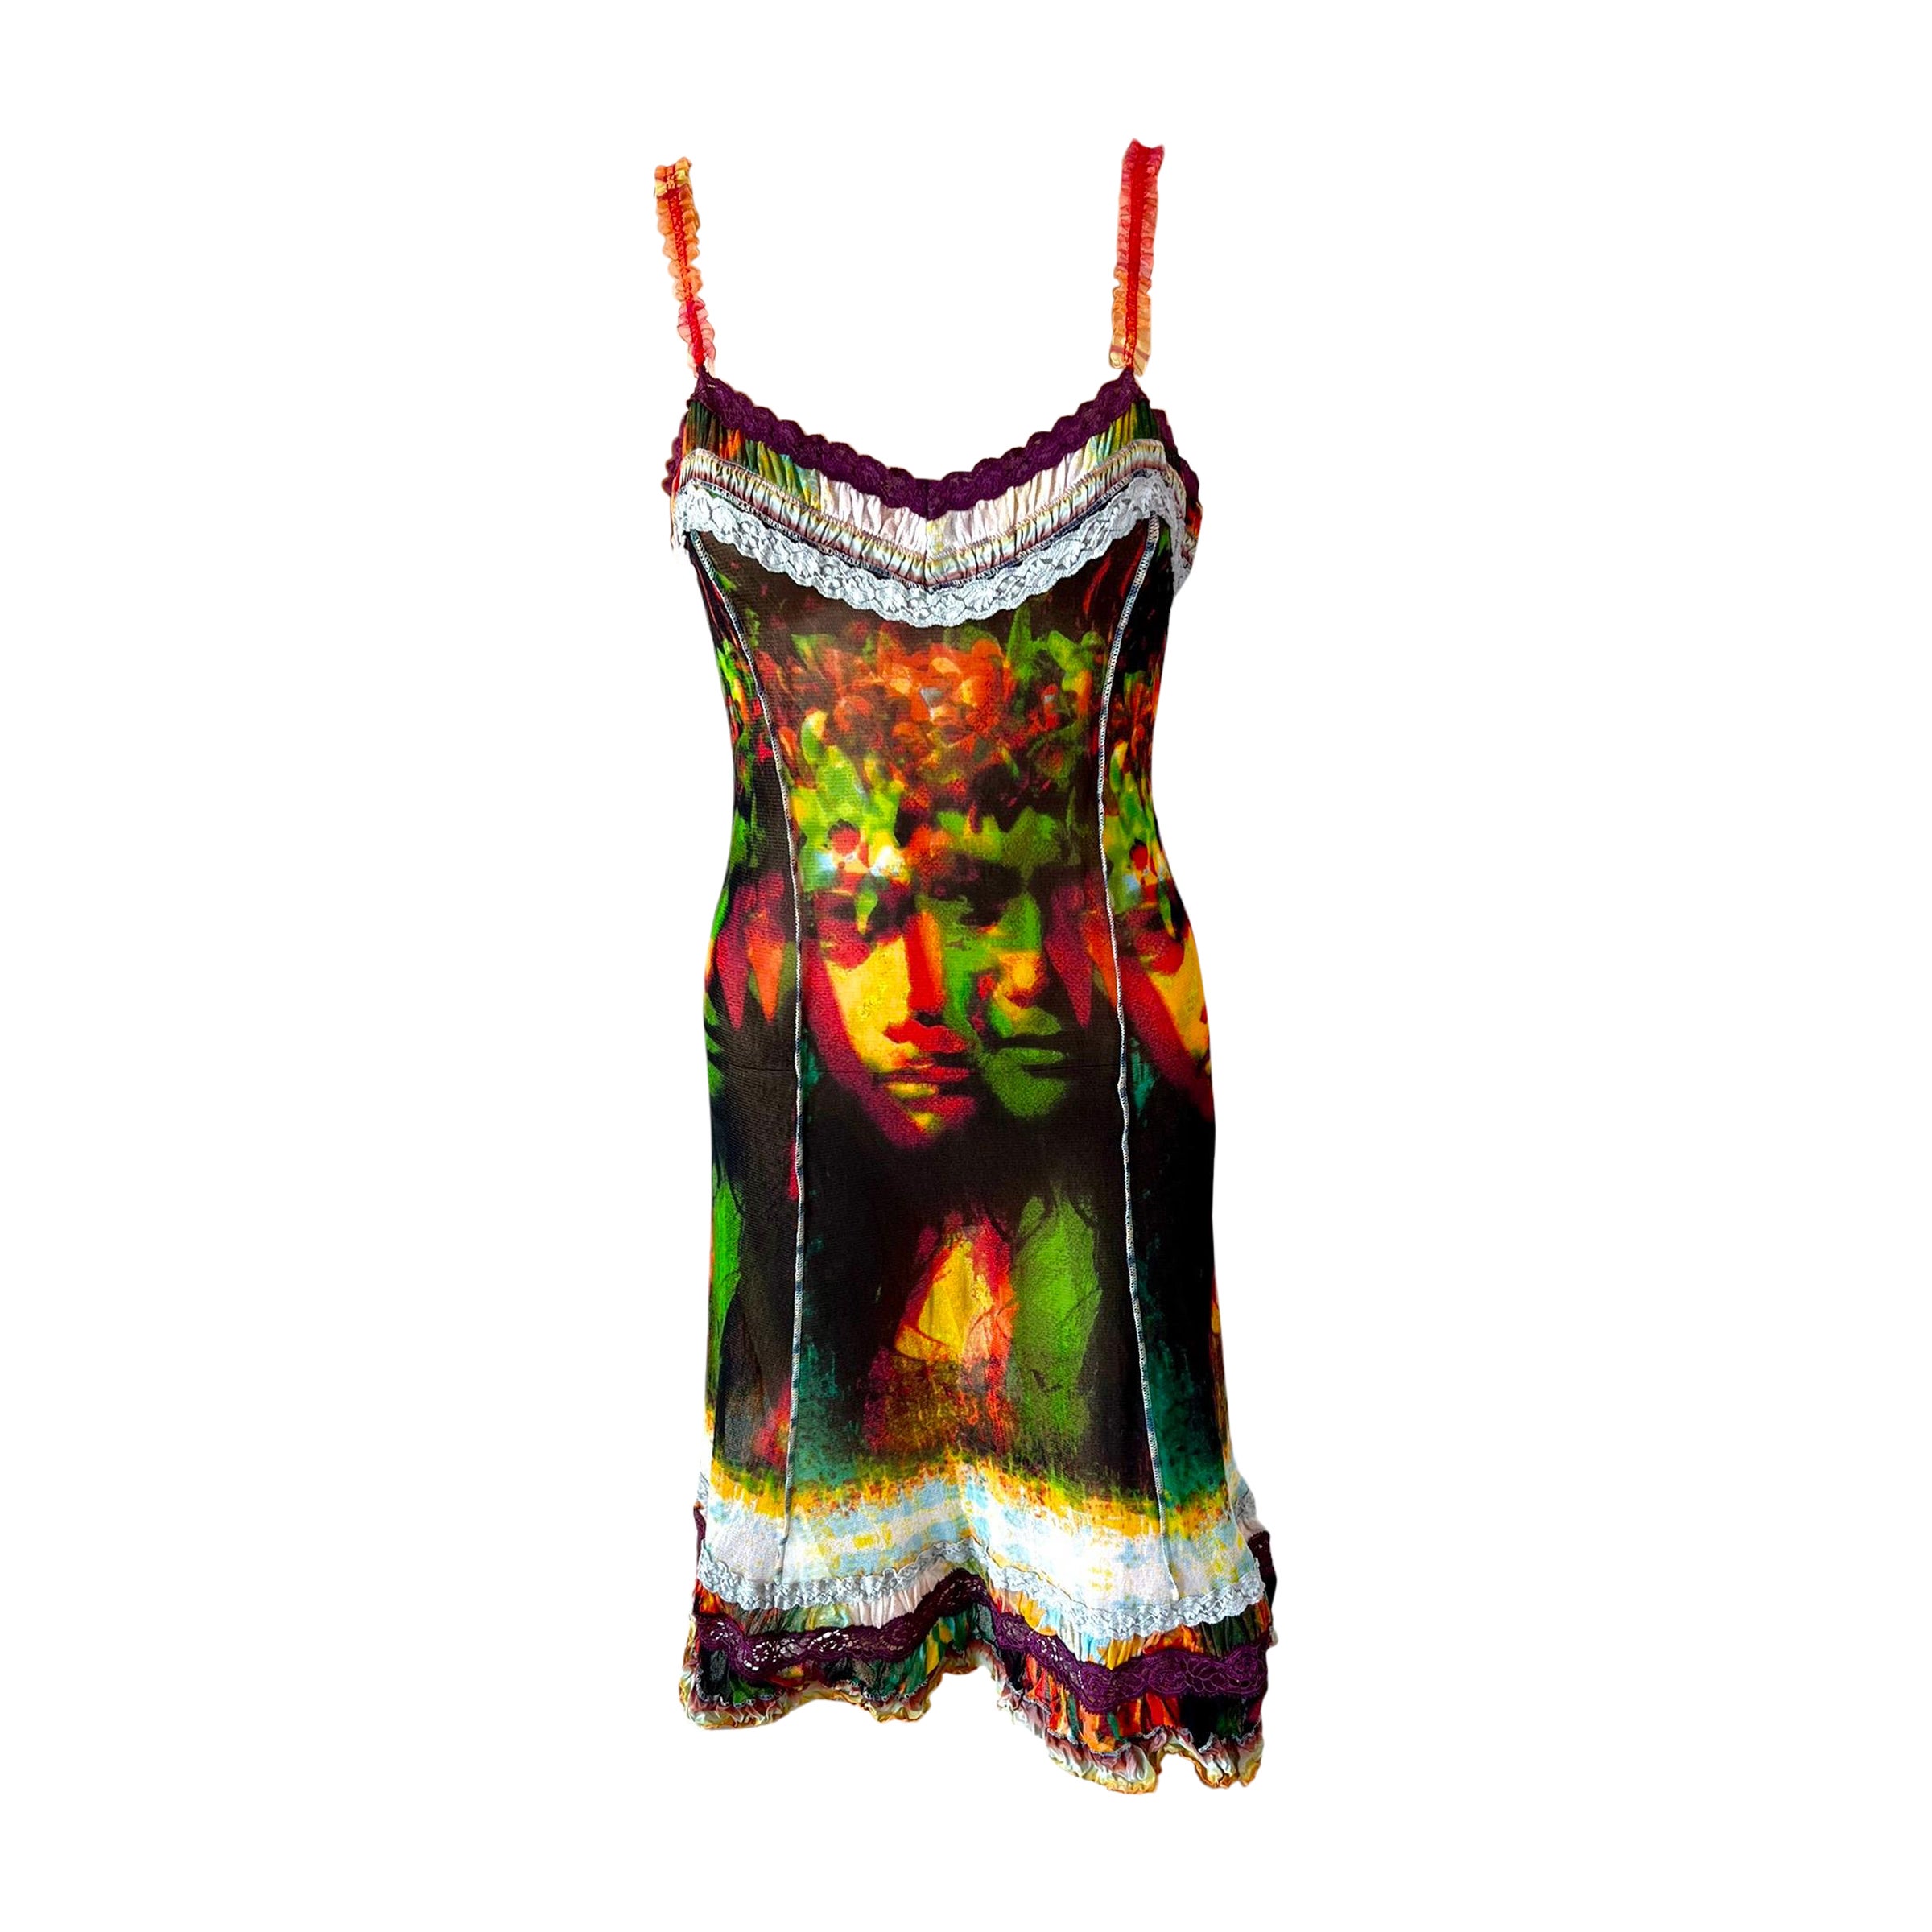 Jean Paul Gaultier S/S 2000 Vintage Psychedelic Semi-Sheer Mesh Dress  For Sale